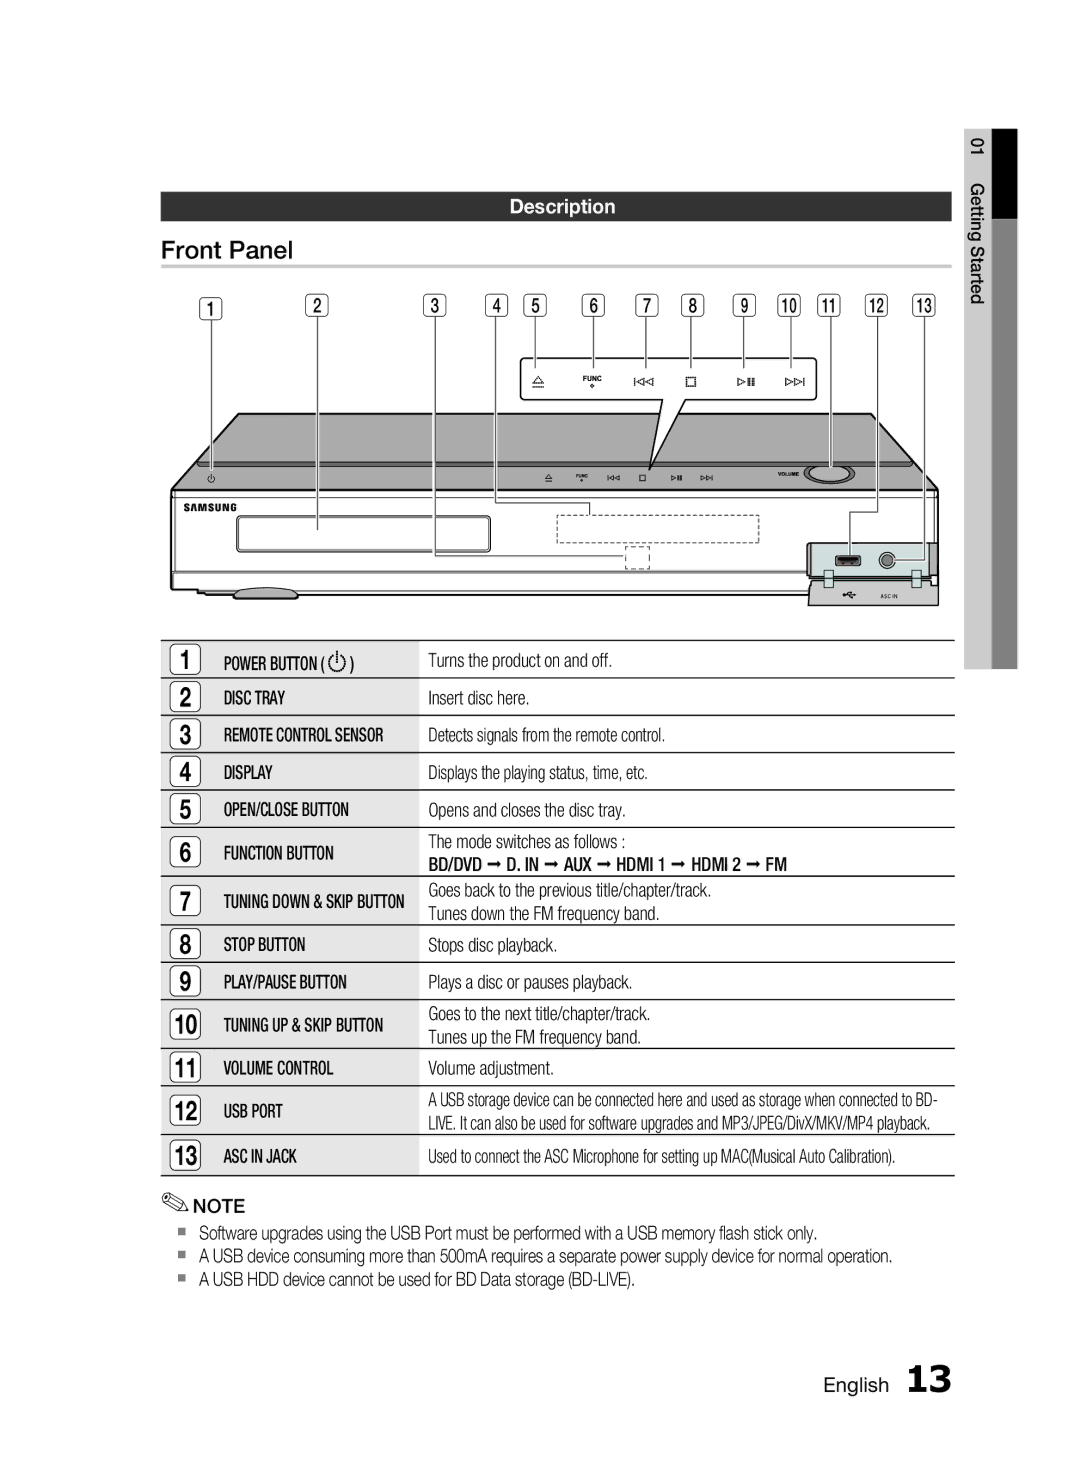 Samsung HT-C5550 user manual Front Panel, Description 